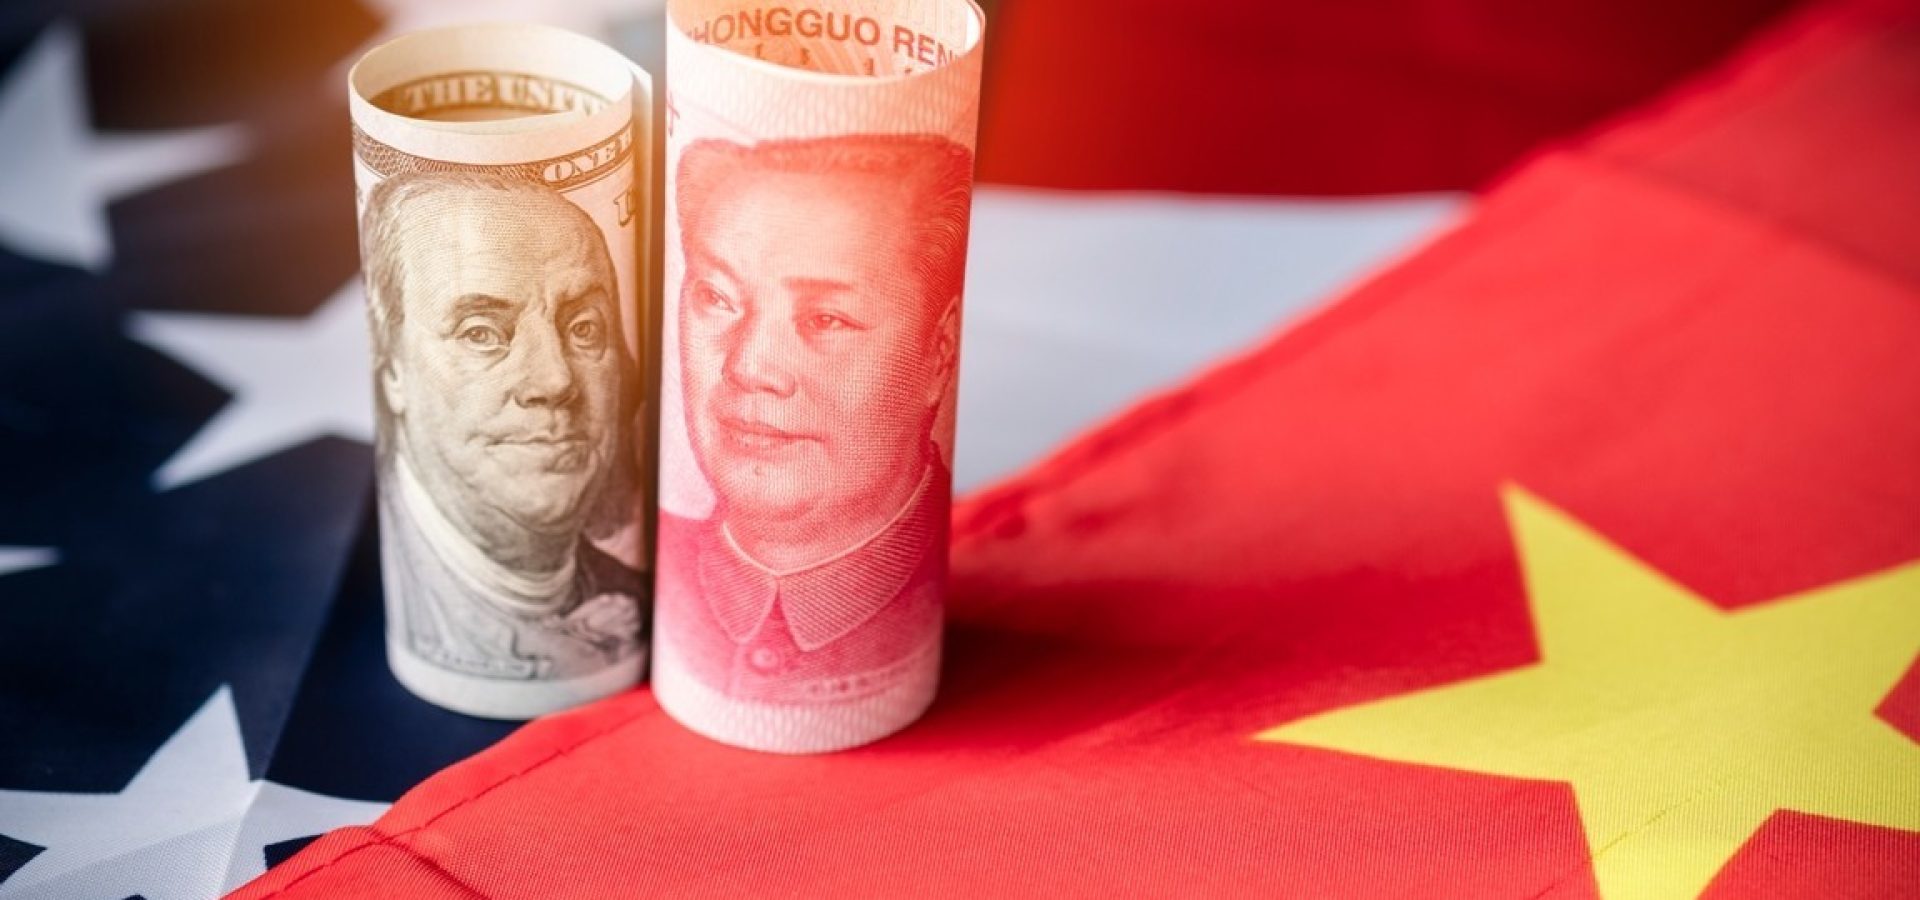 U.S dollar and Chinese Yuan